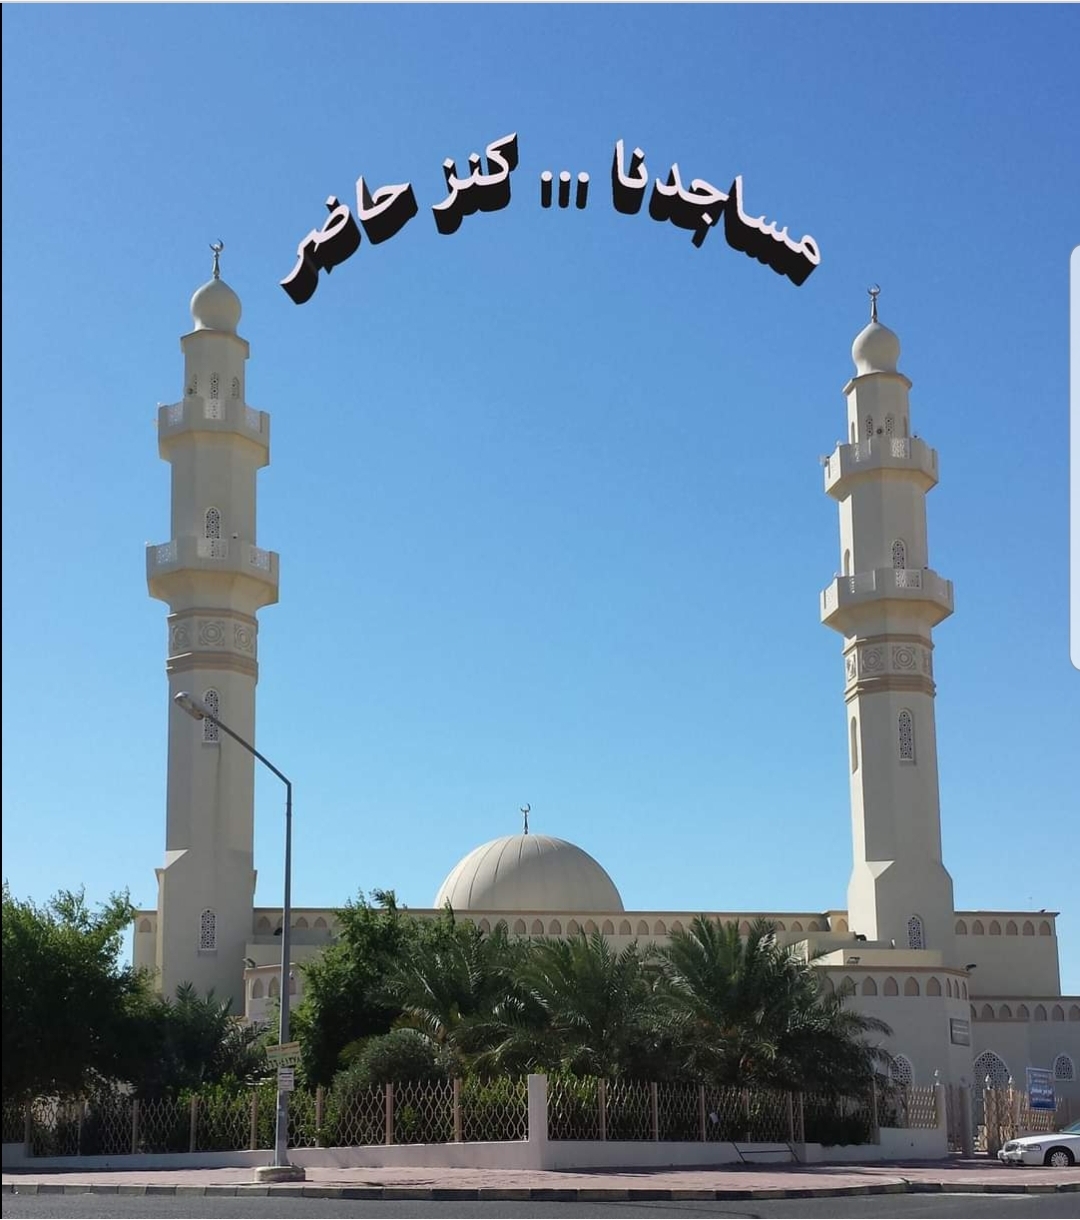 Ahmadi mosque